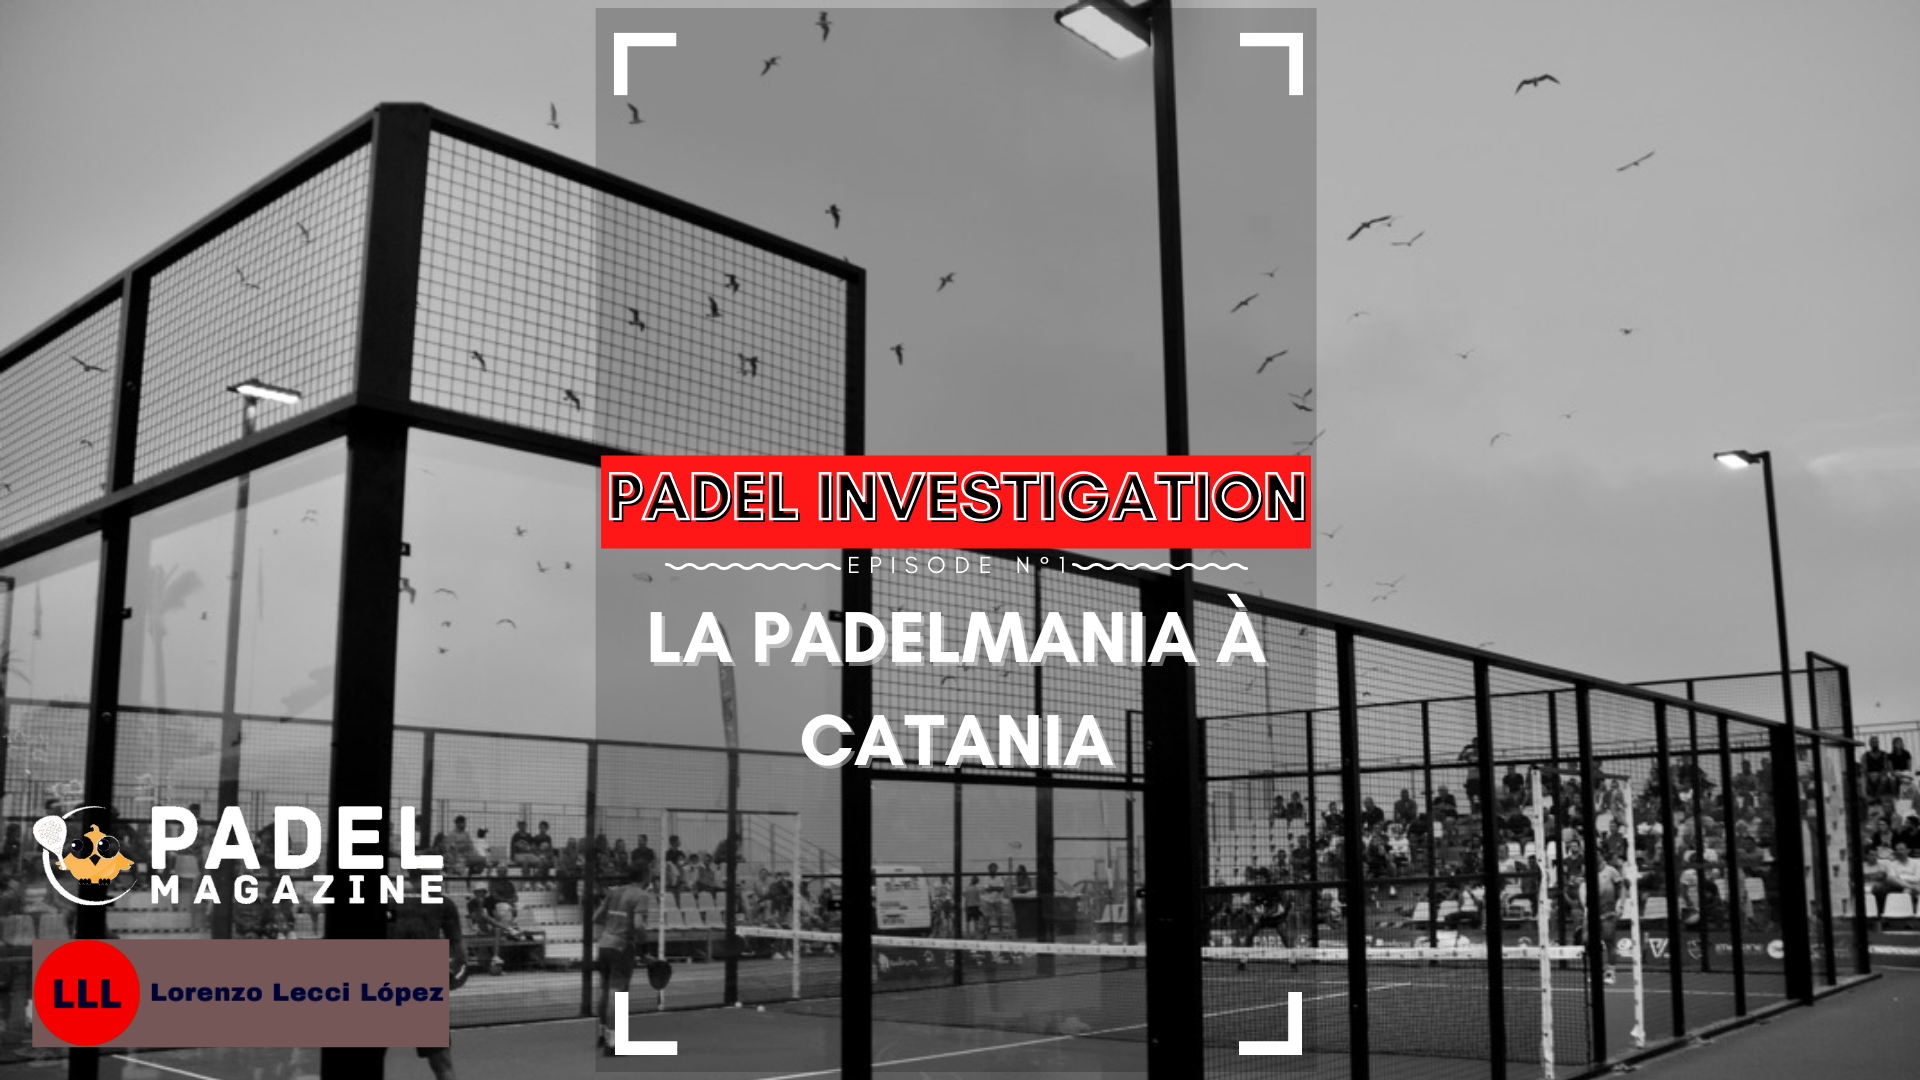 Padel Mag throws Padel Investigation